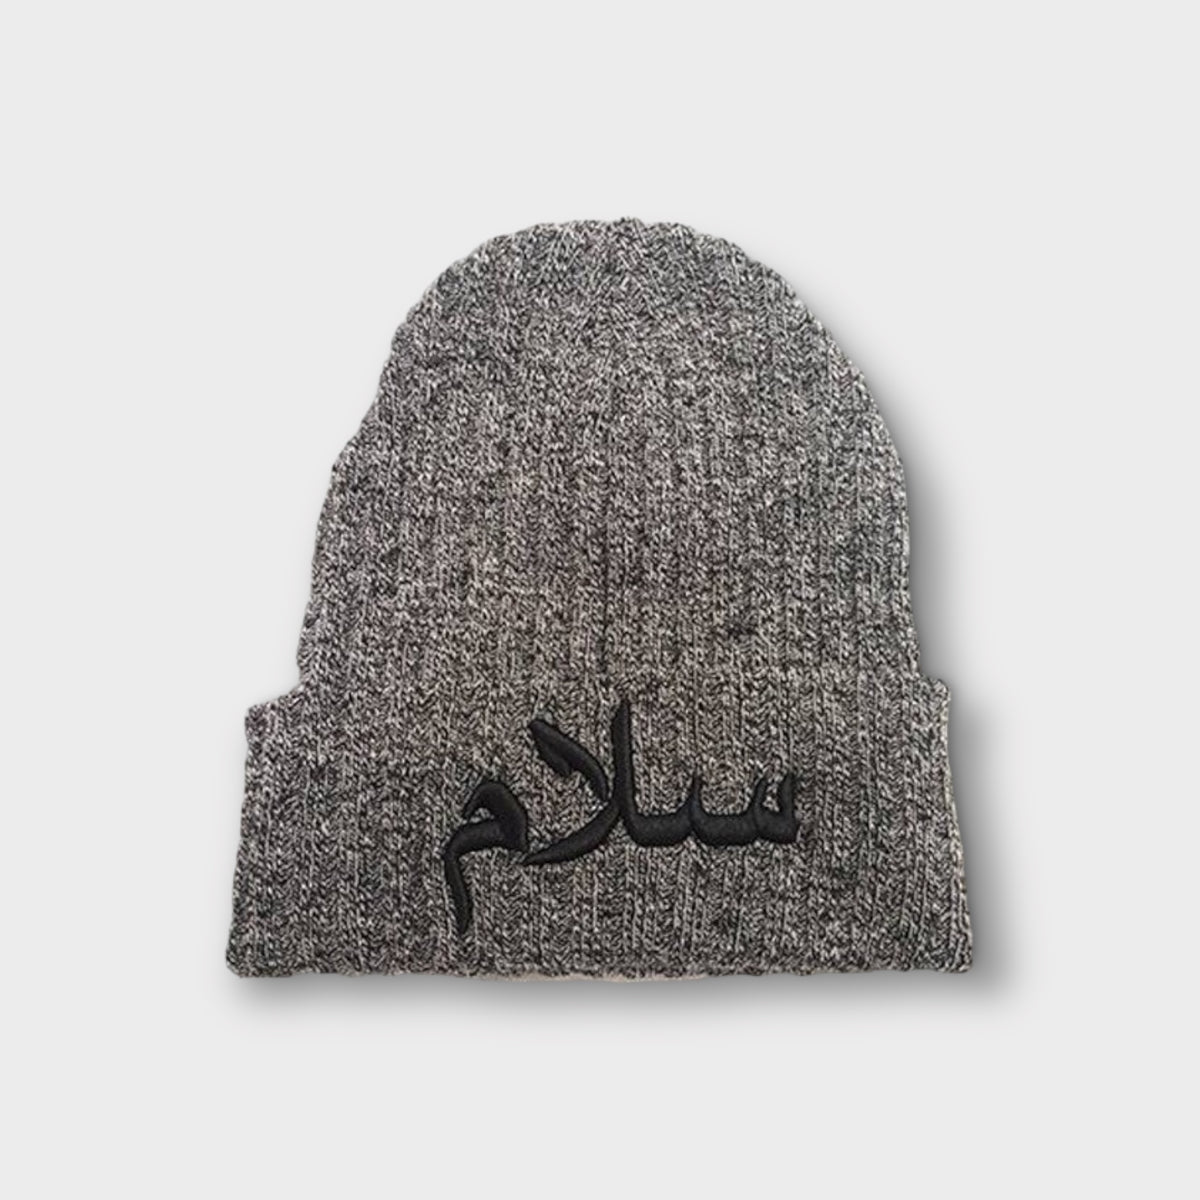 Grey Salam/Peace Beanie Hat - JLifestyle Store